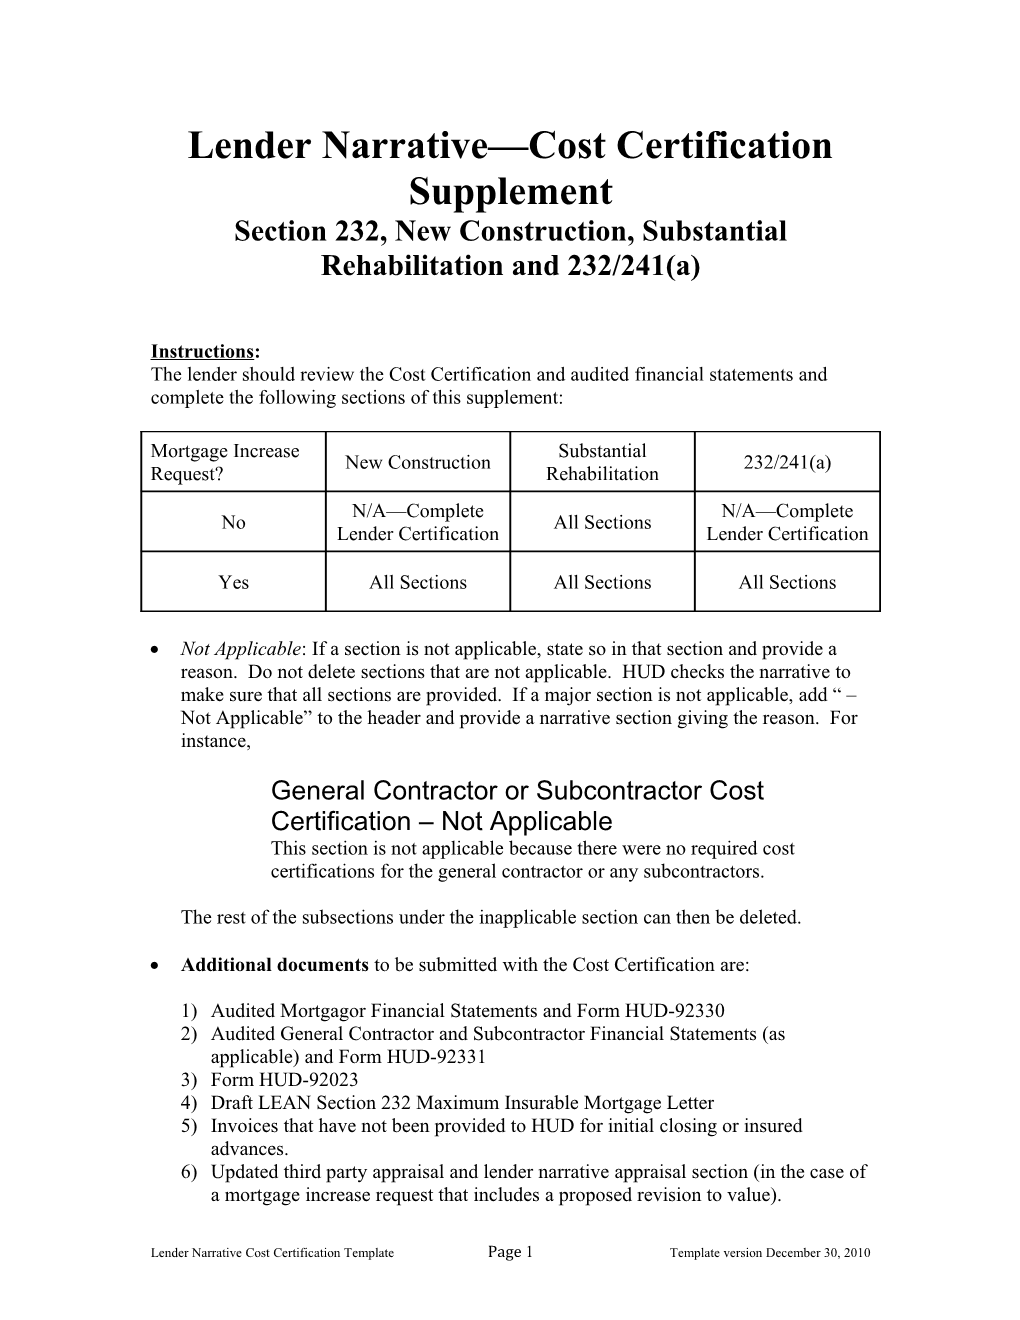 Lender Narrative Cost Certification Supplement